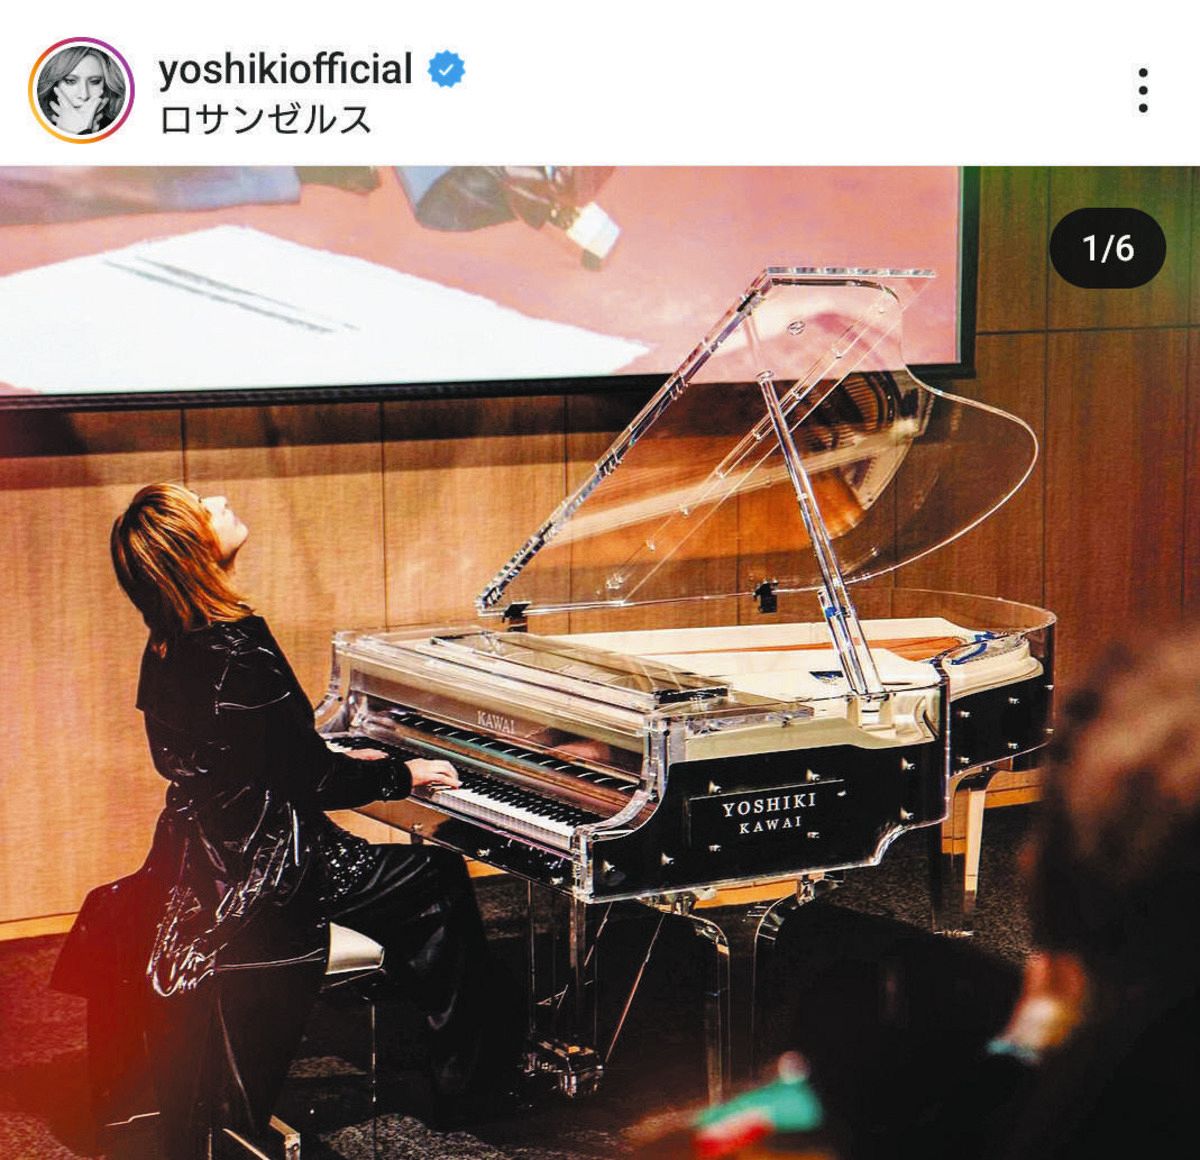 ToshI FEAT. YOSHIKI クリスタルピアノのキミ ♪ - CD